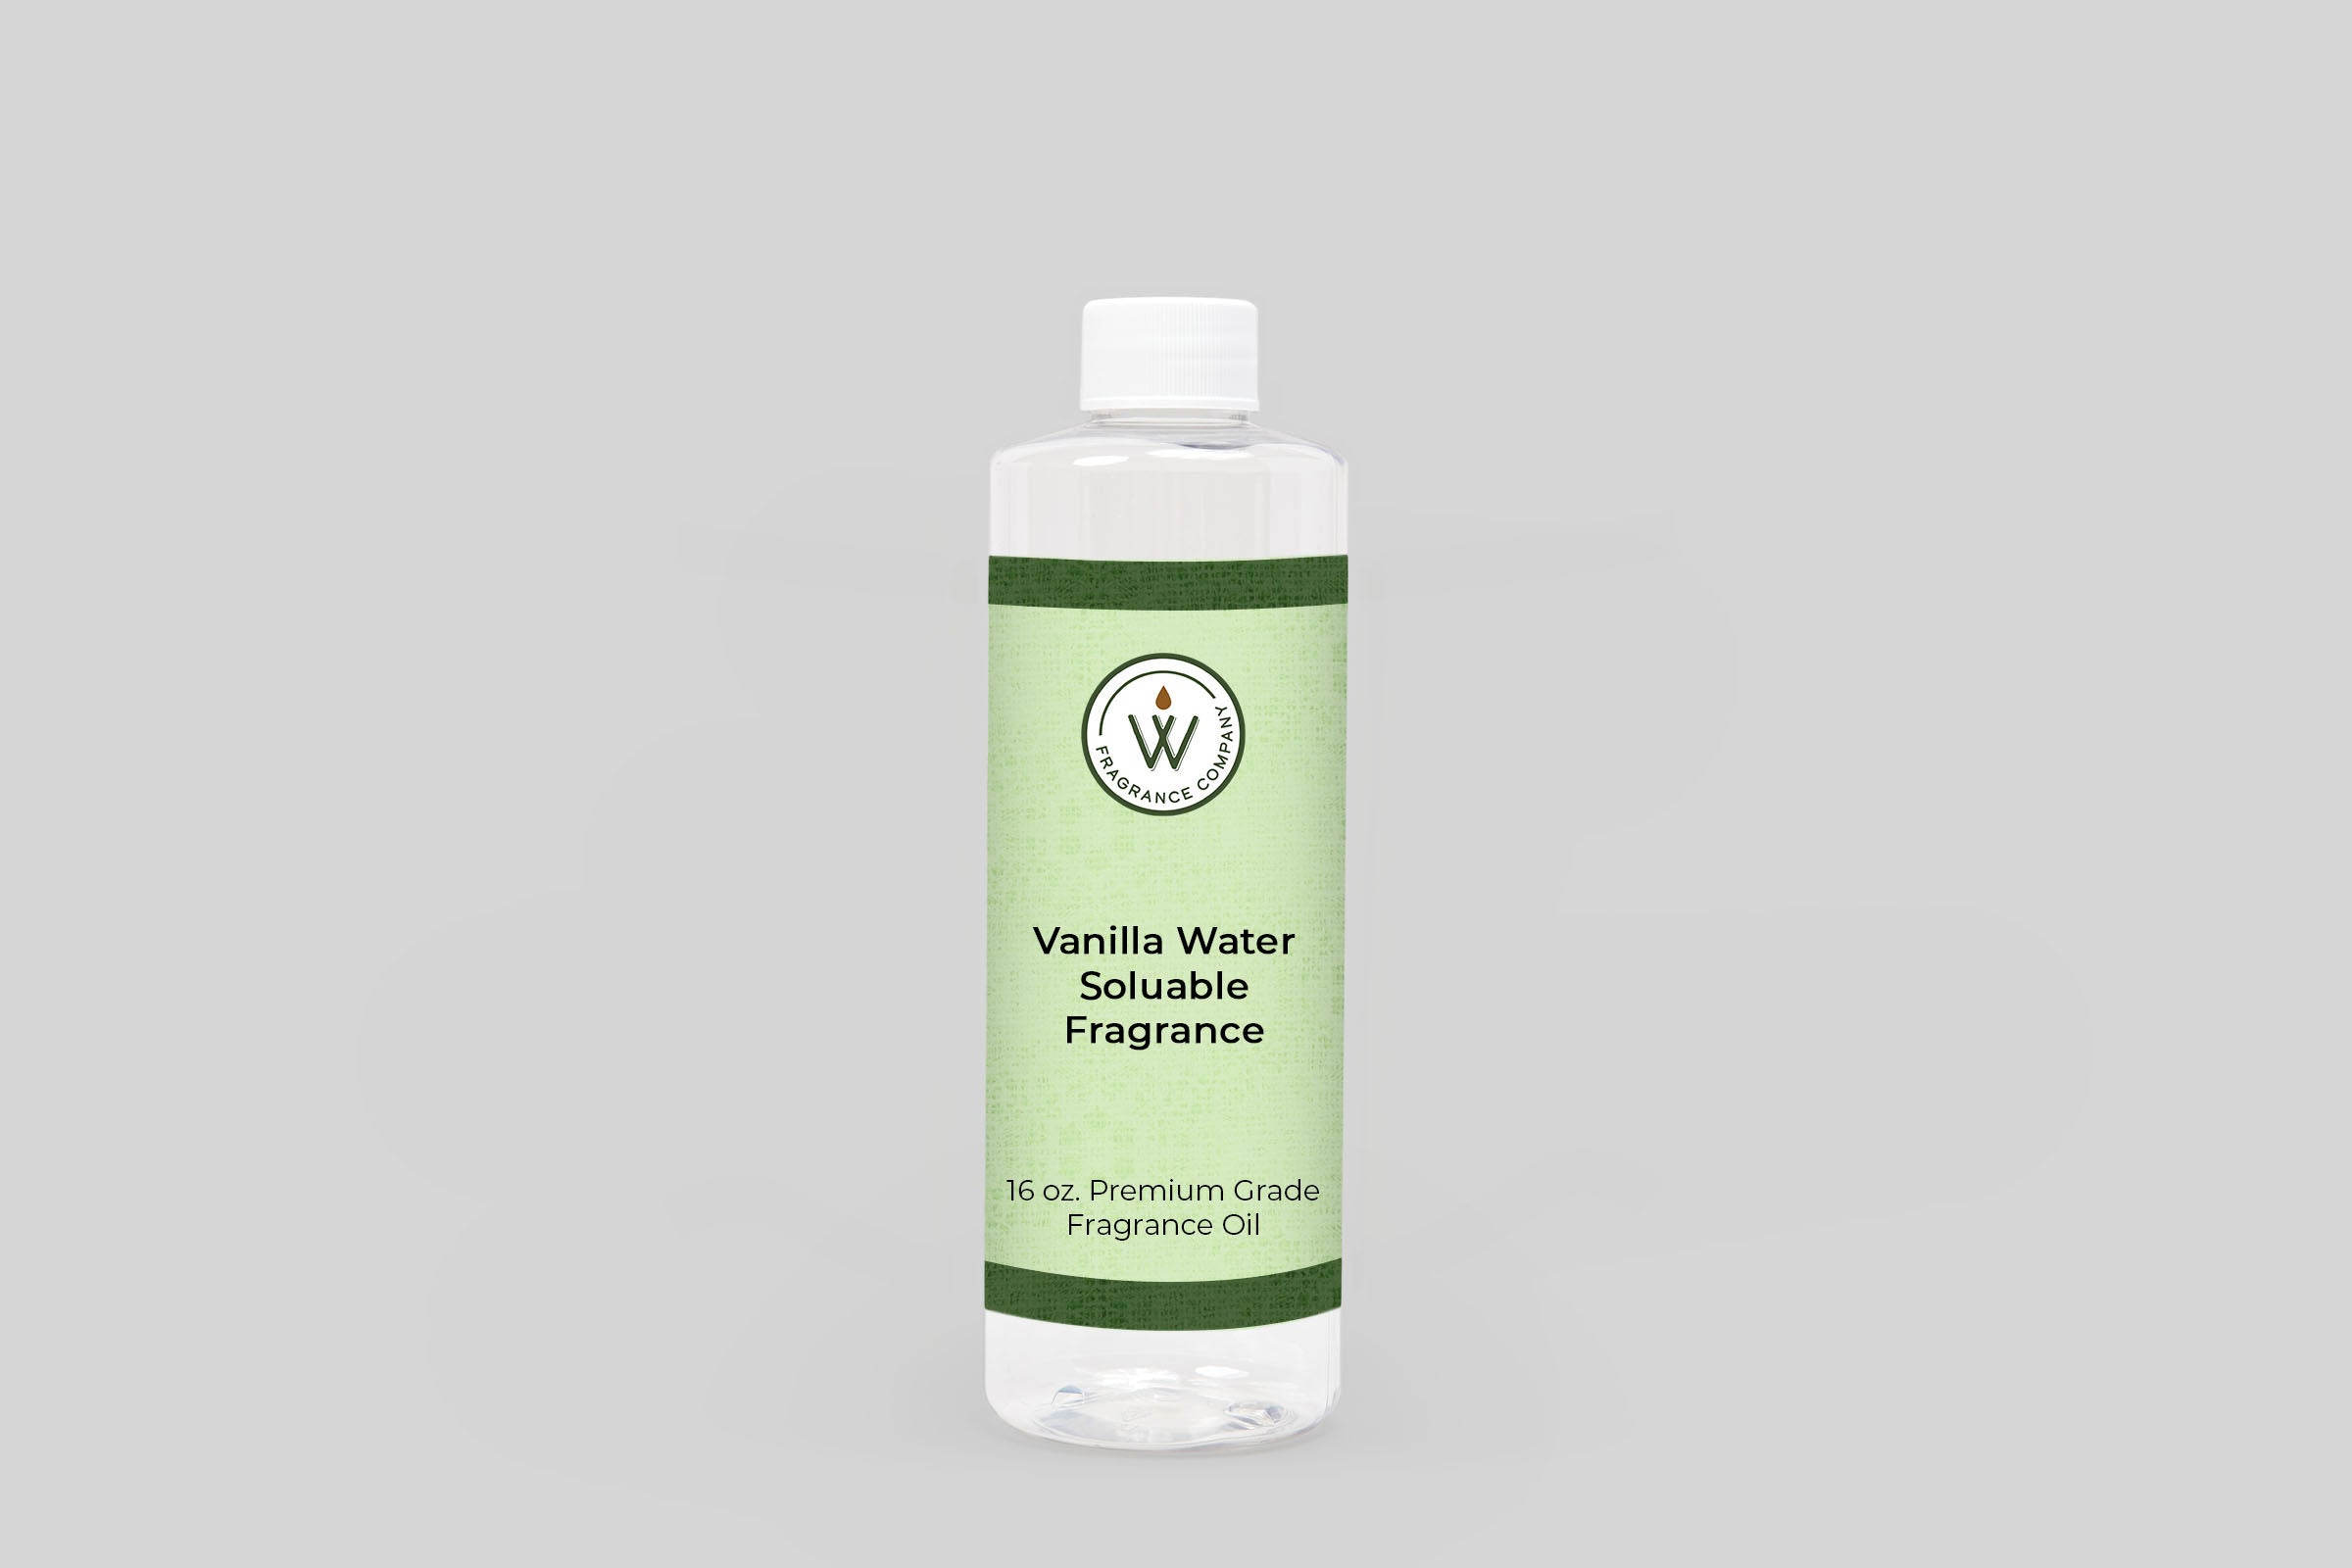 Vanilla Water Soluble Fragrance